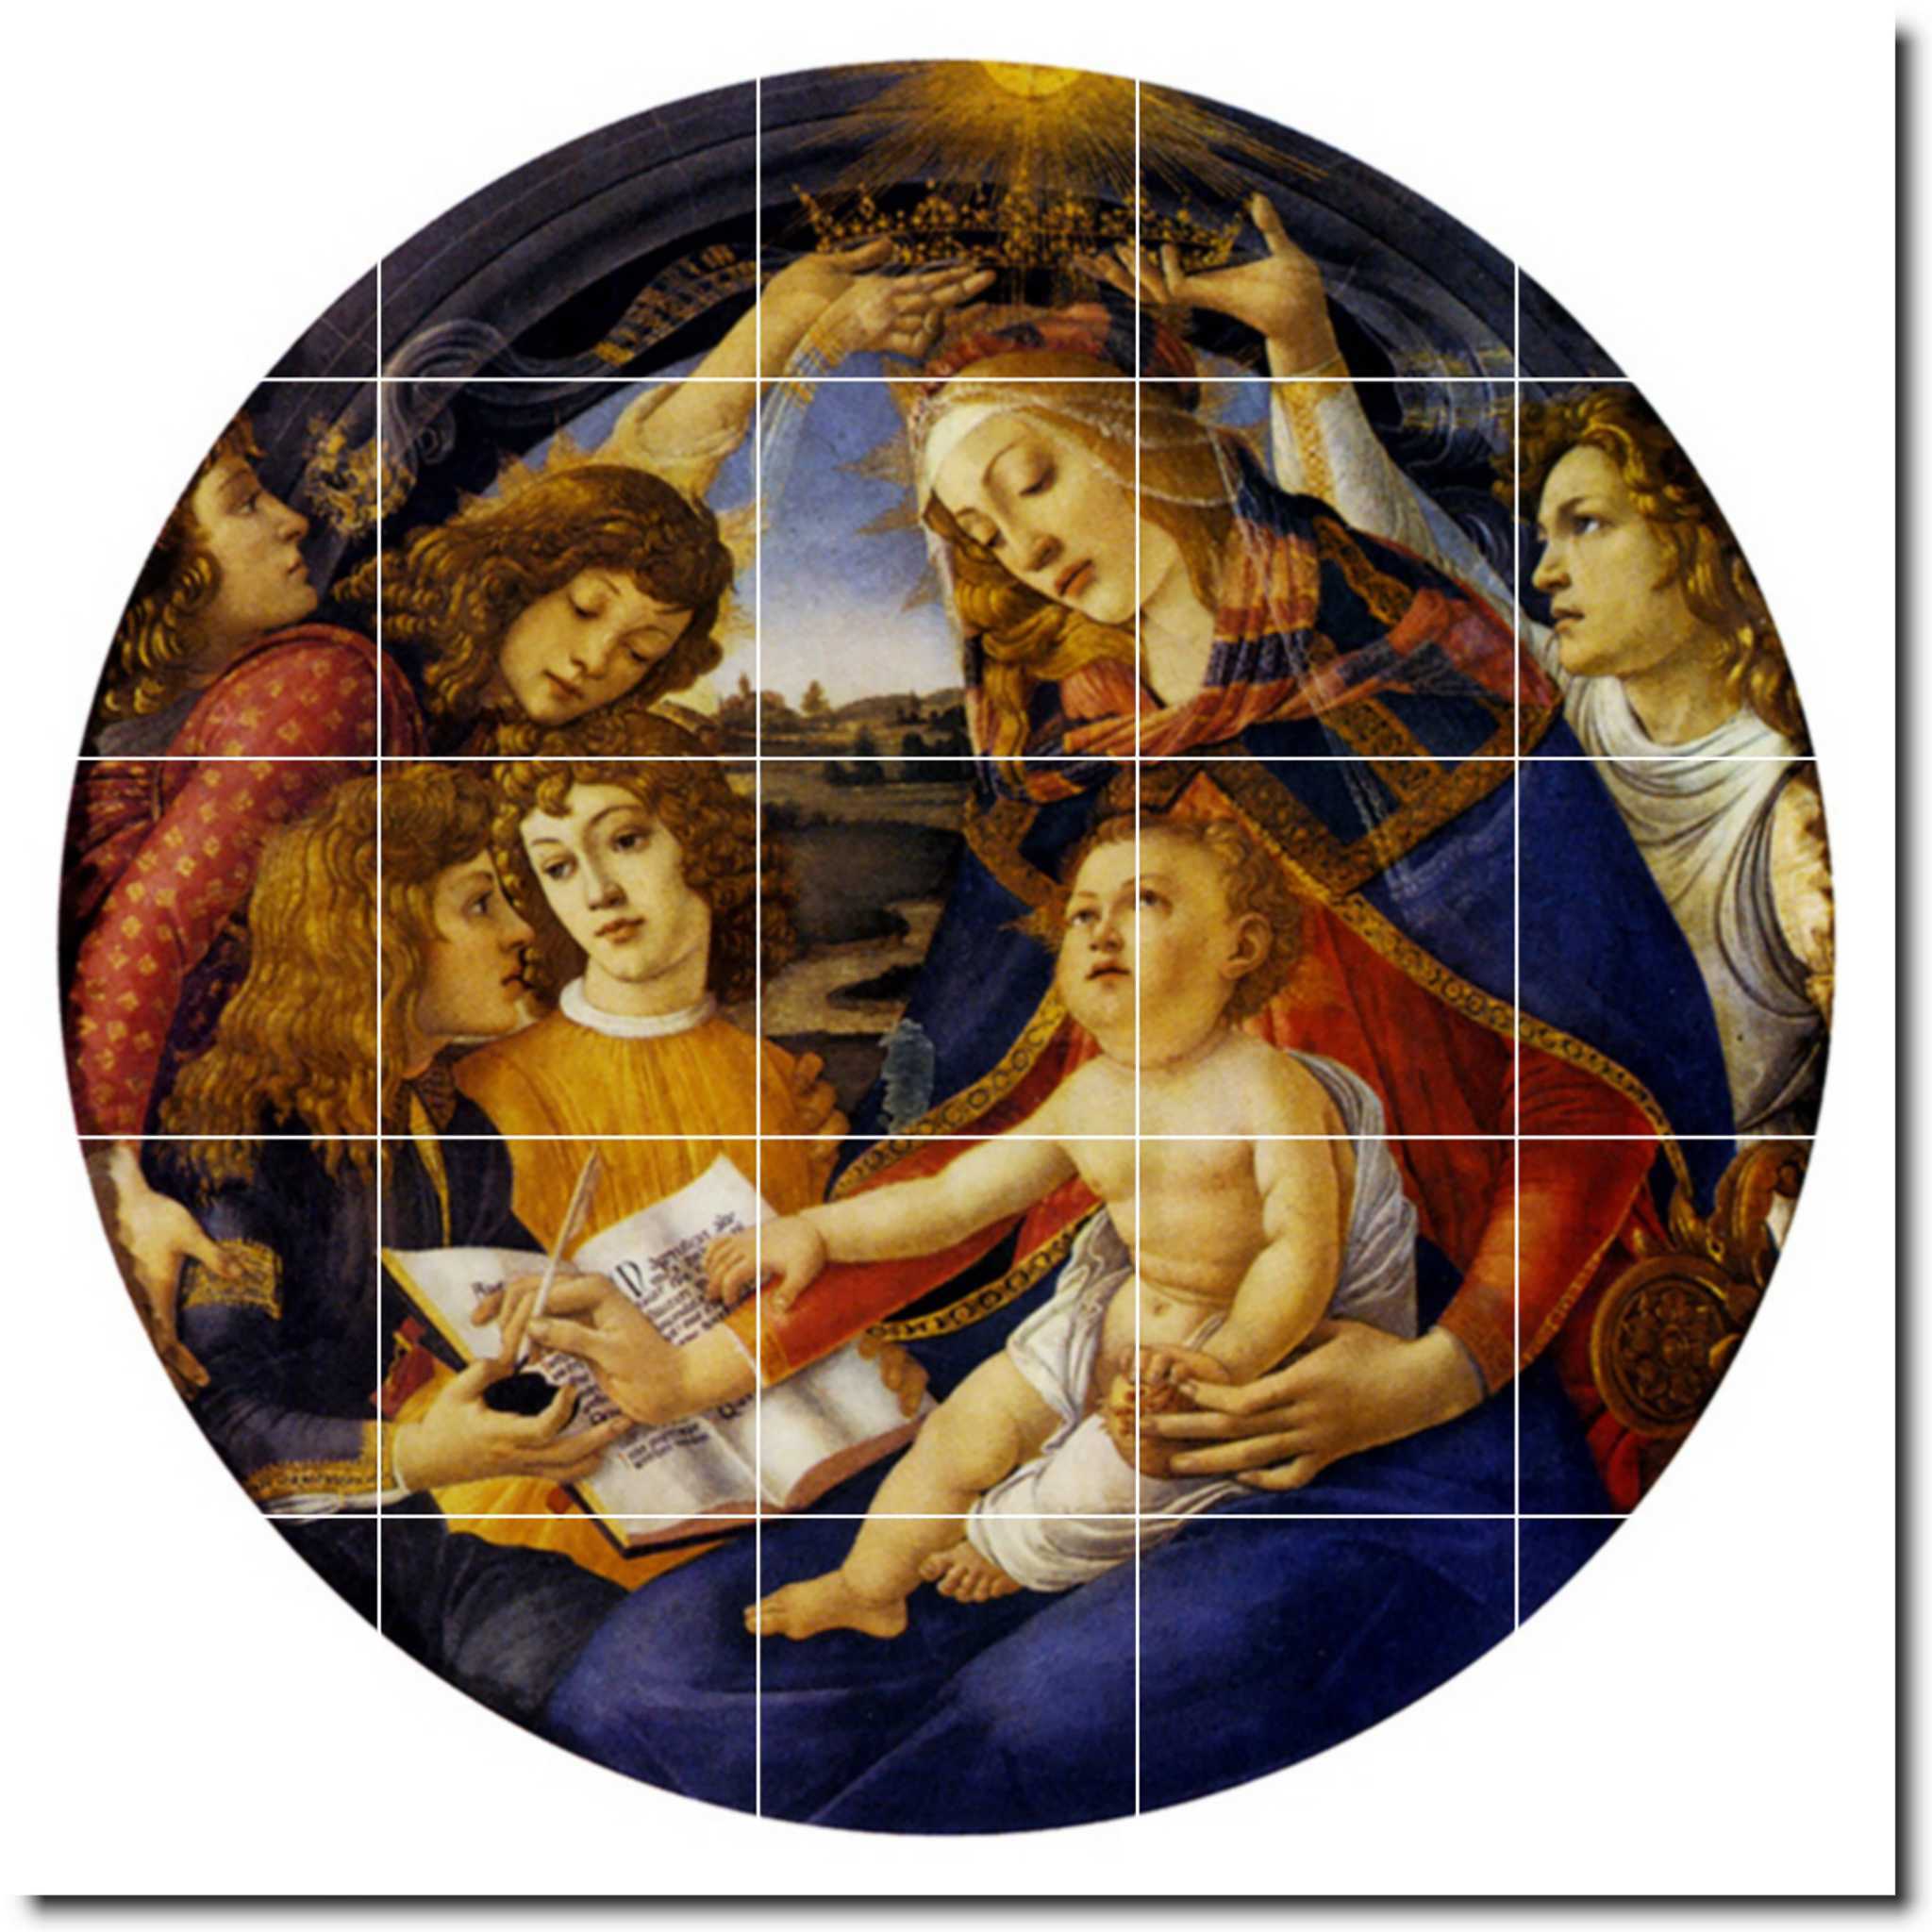 sandro botticelli religious painting ceramic tile mural p00679